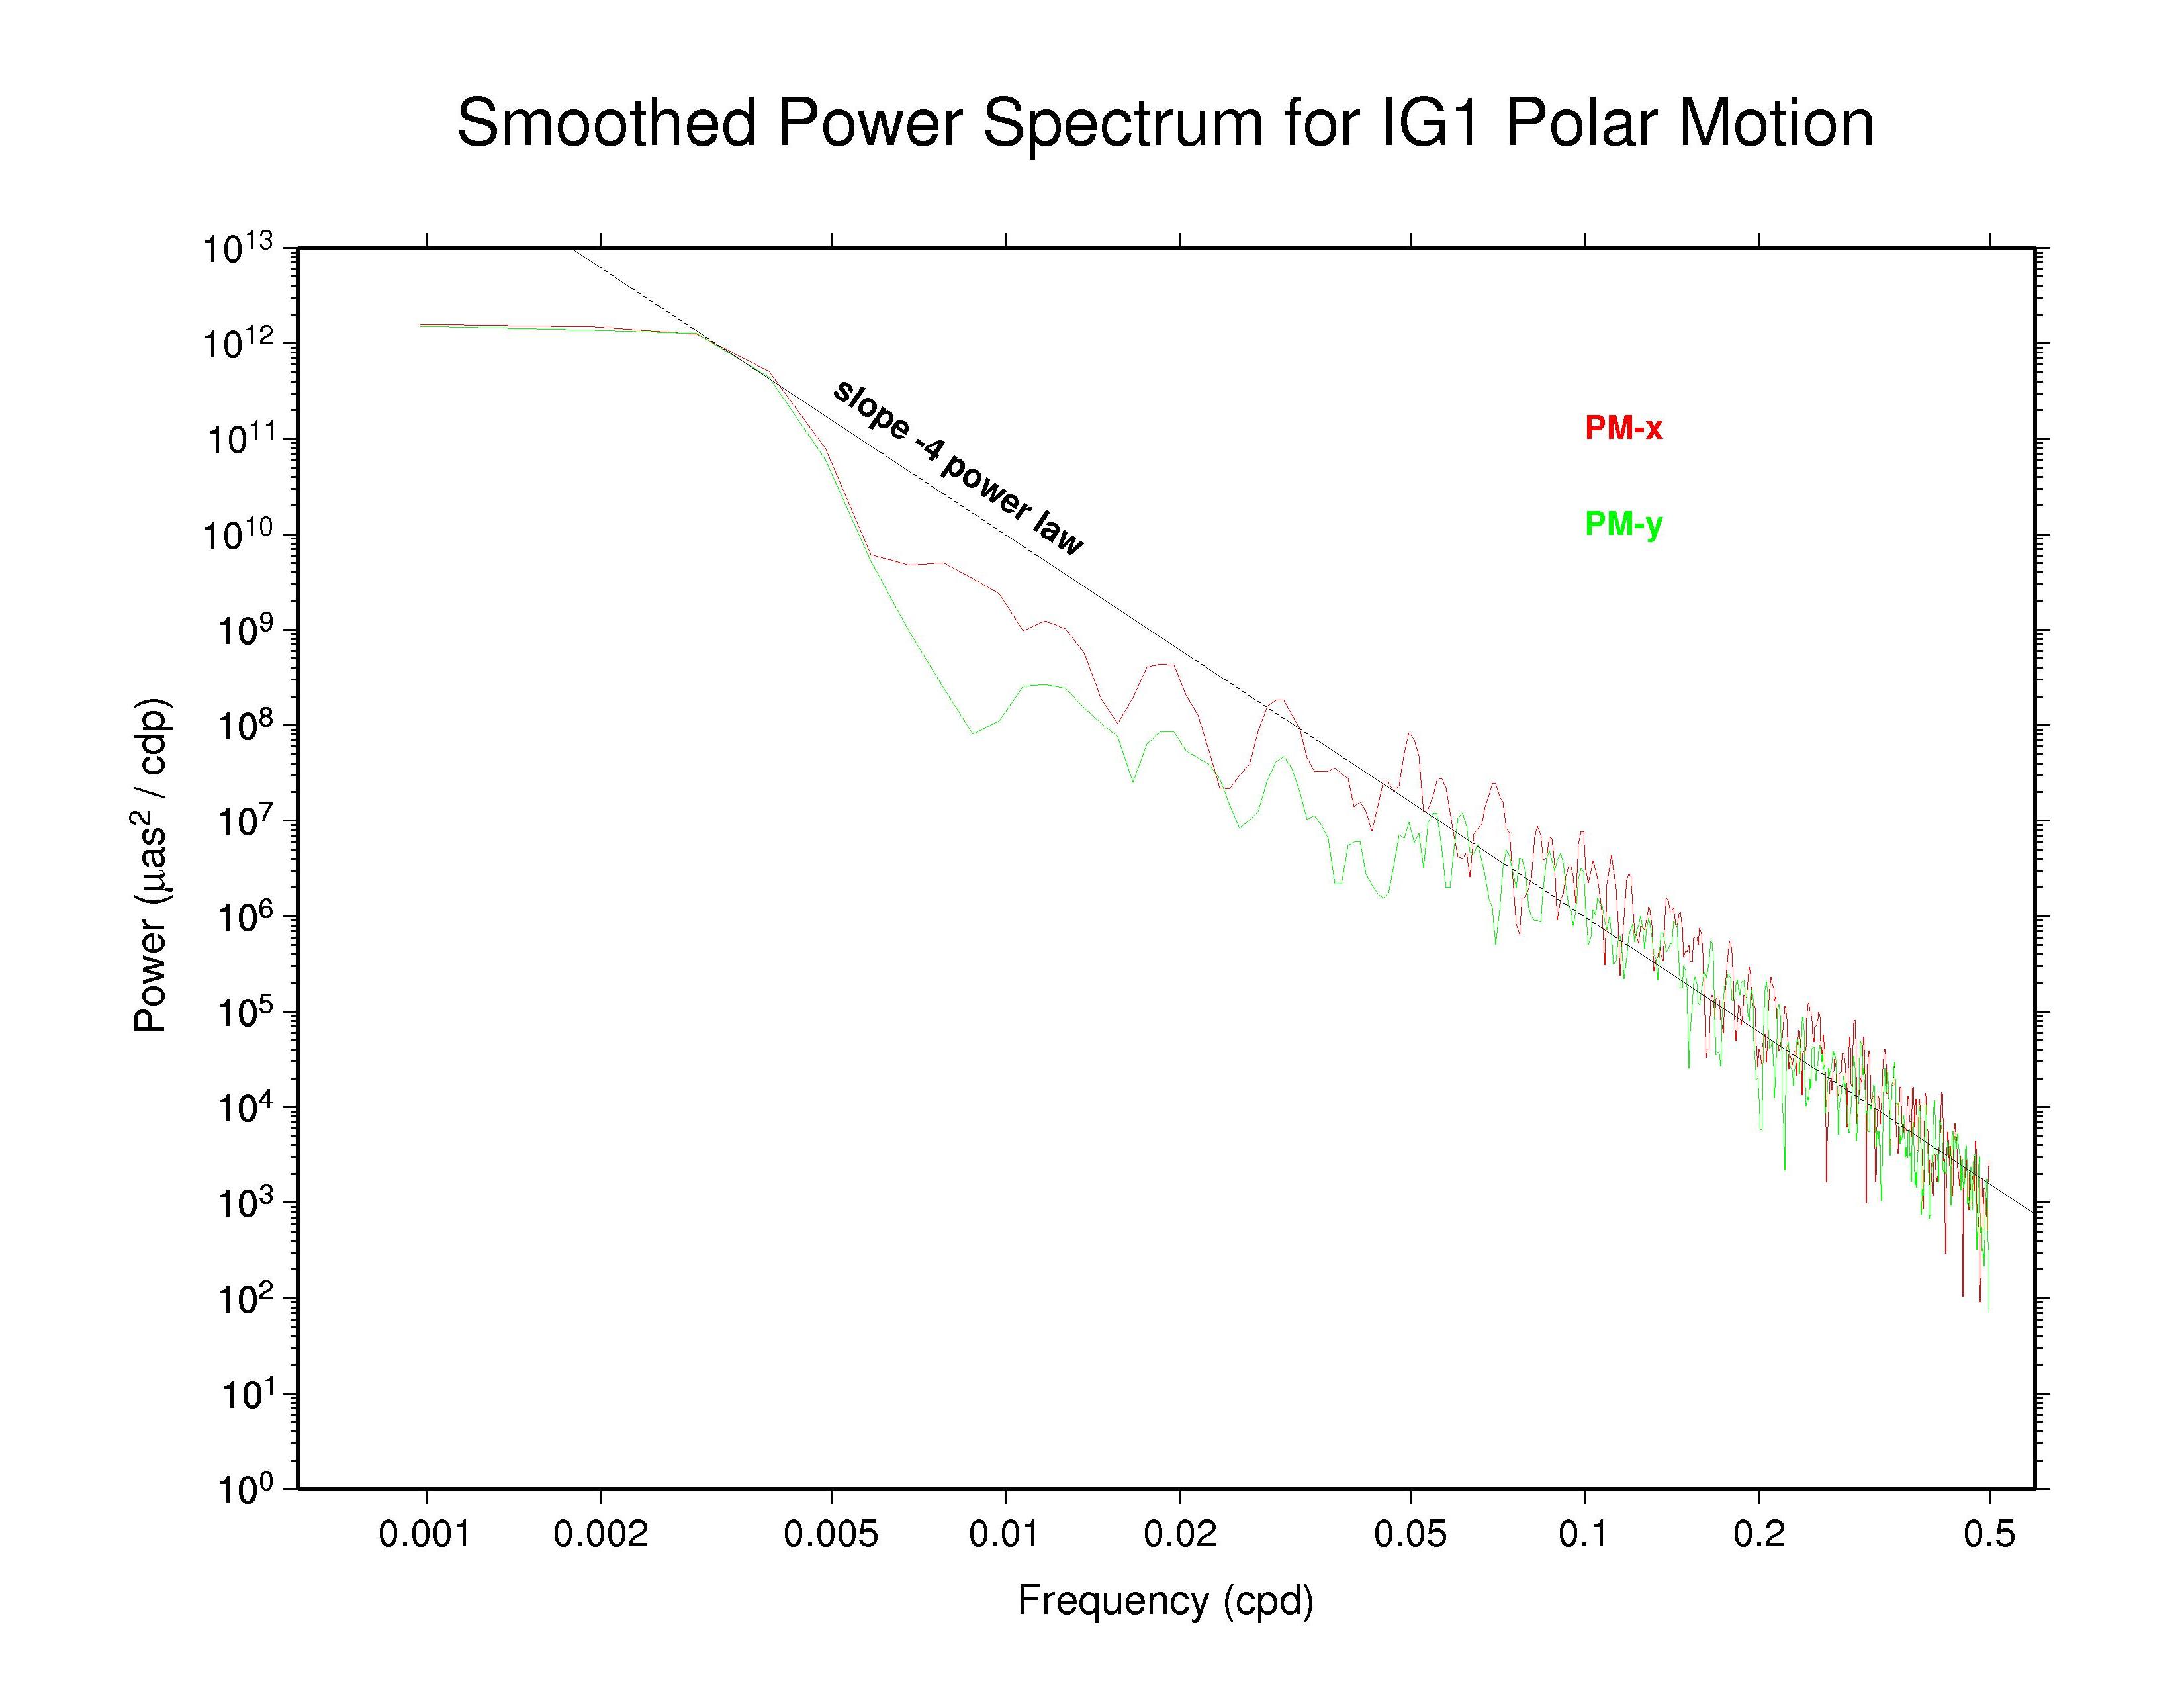 IGS polar motion spectra